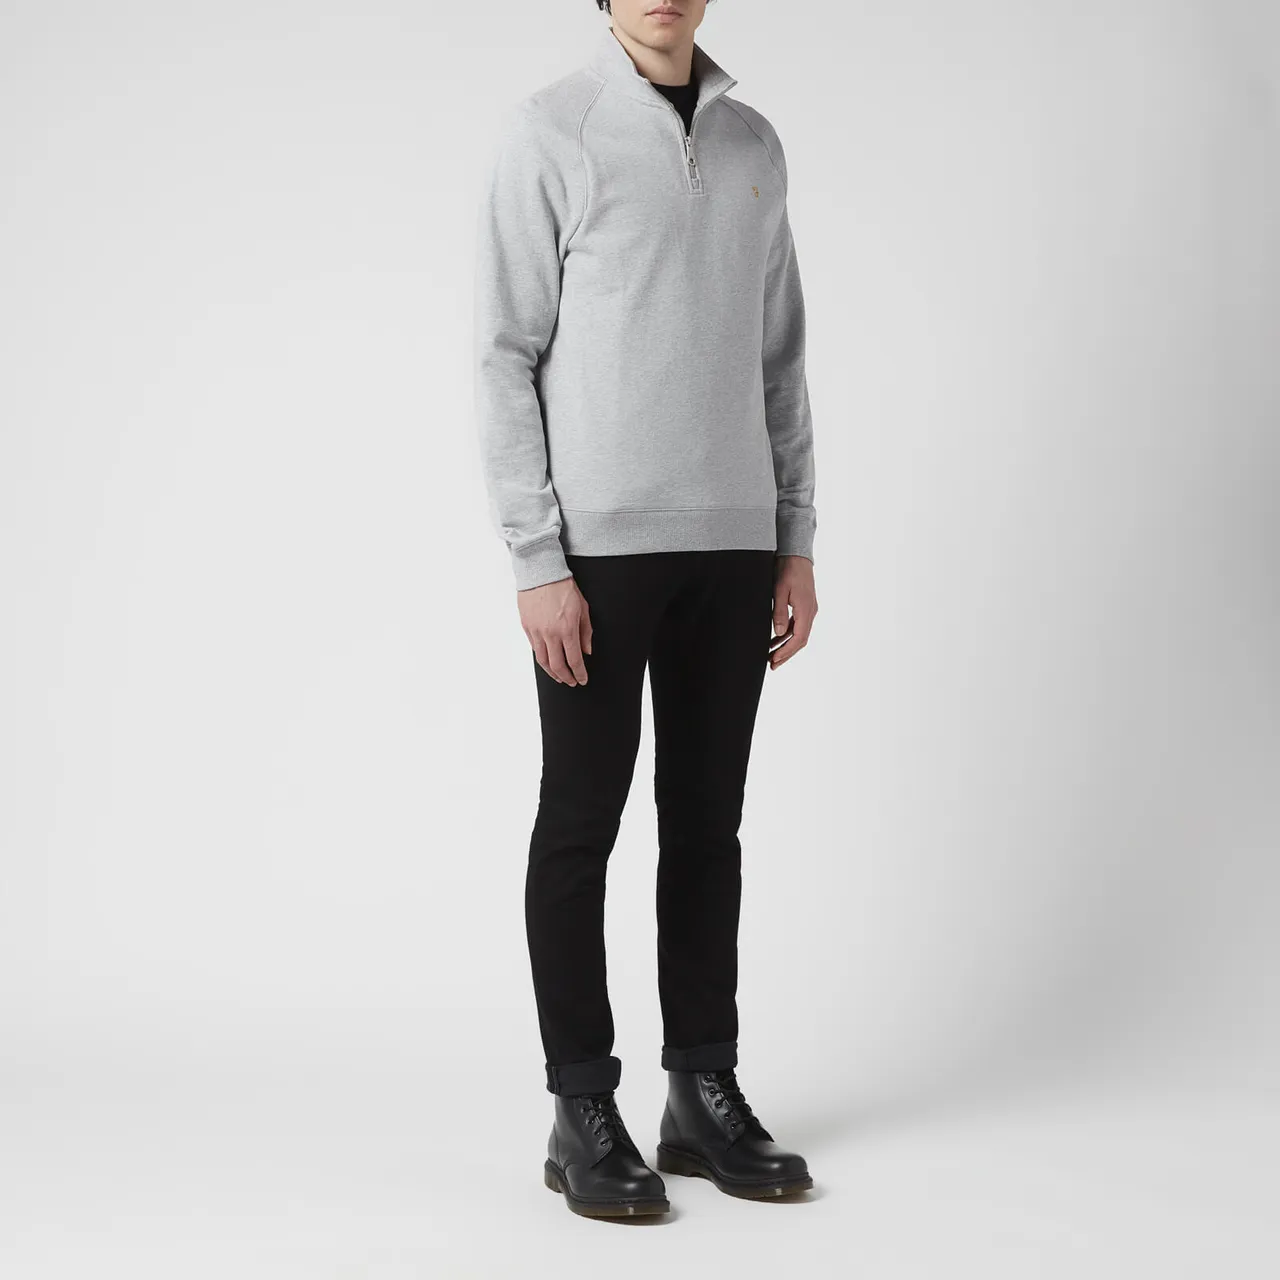 Farah Men's Jim Quarter Zip Sweatshirt - Light Grey Marl